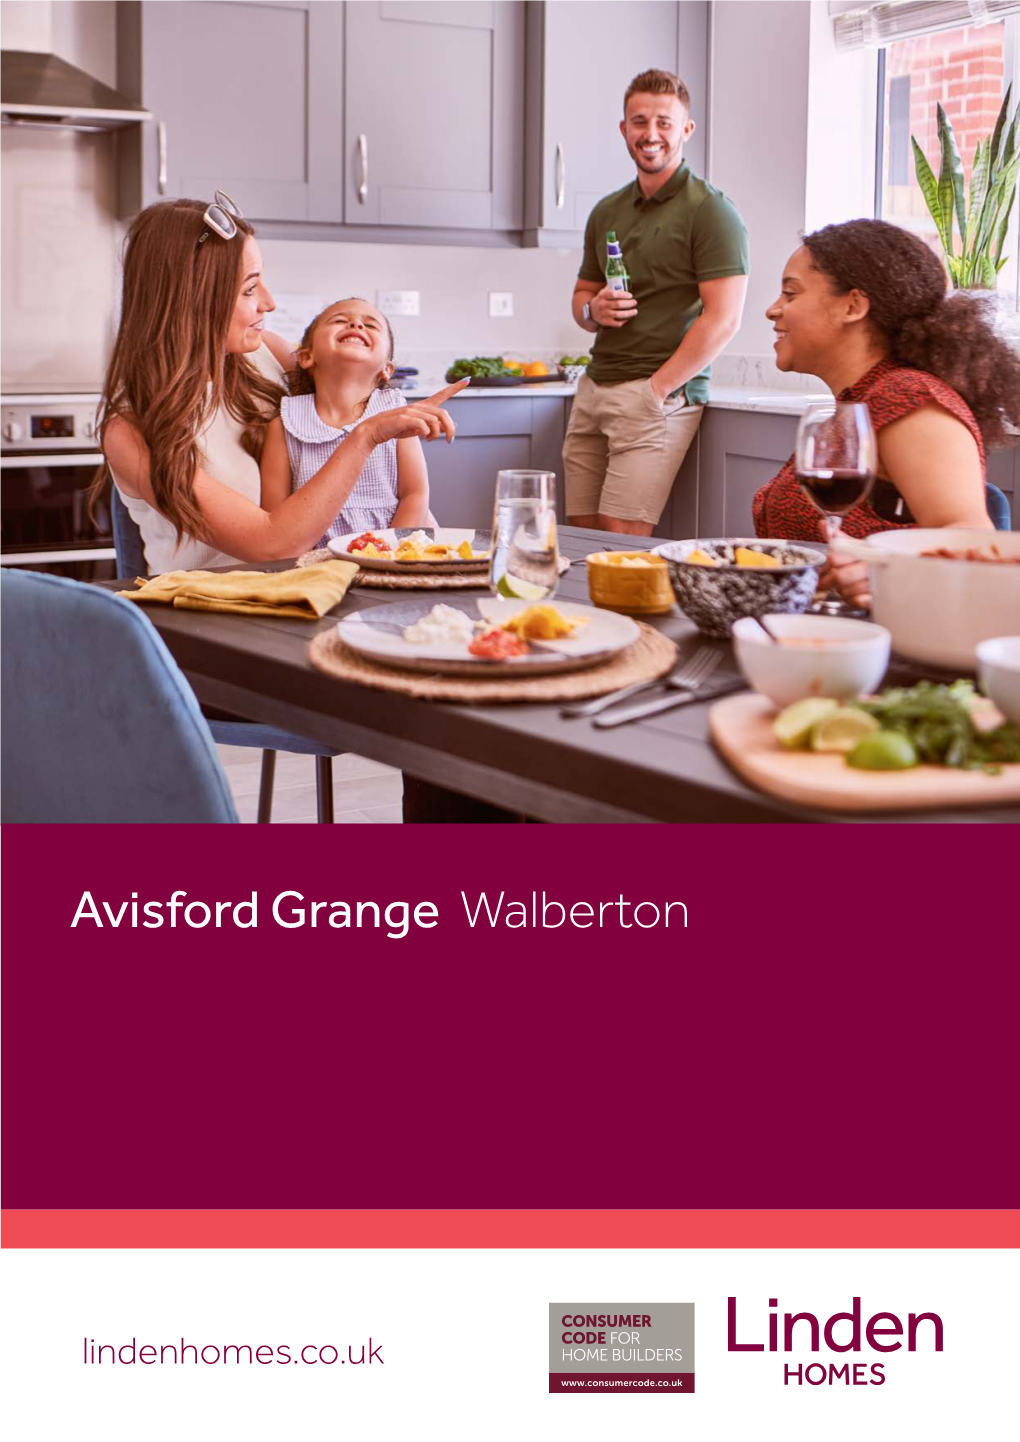 Avisford Grange Walberton